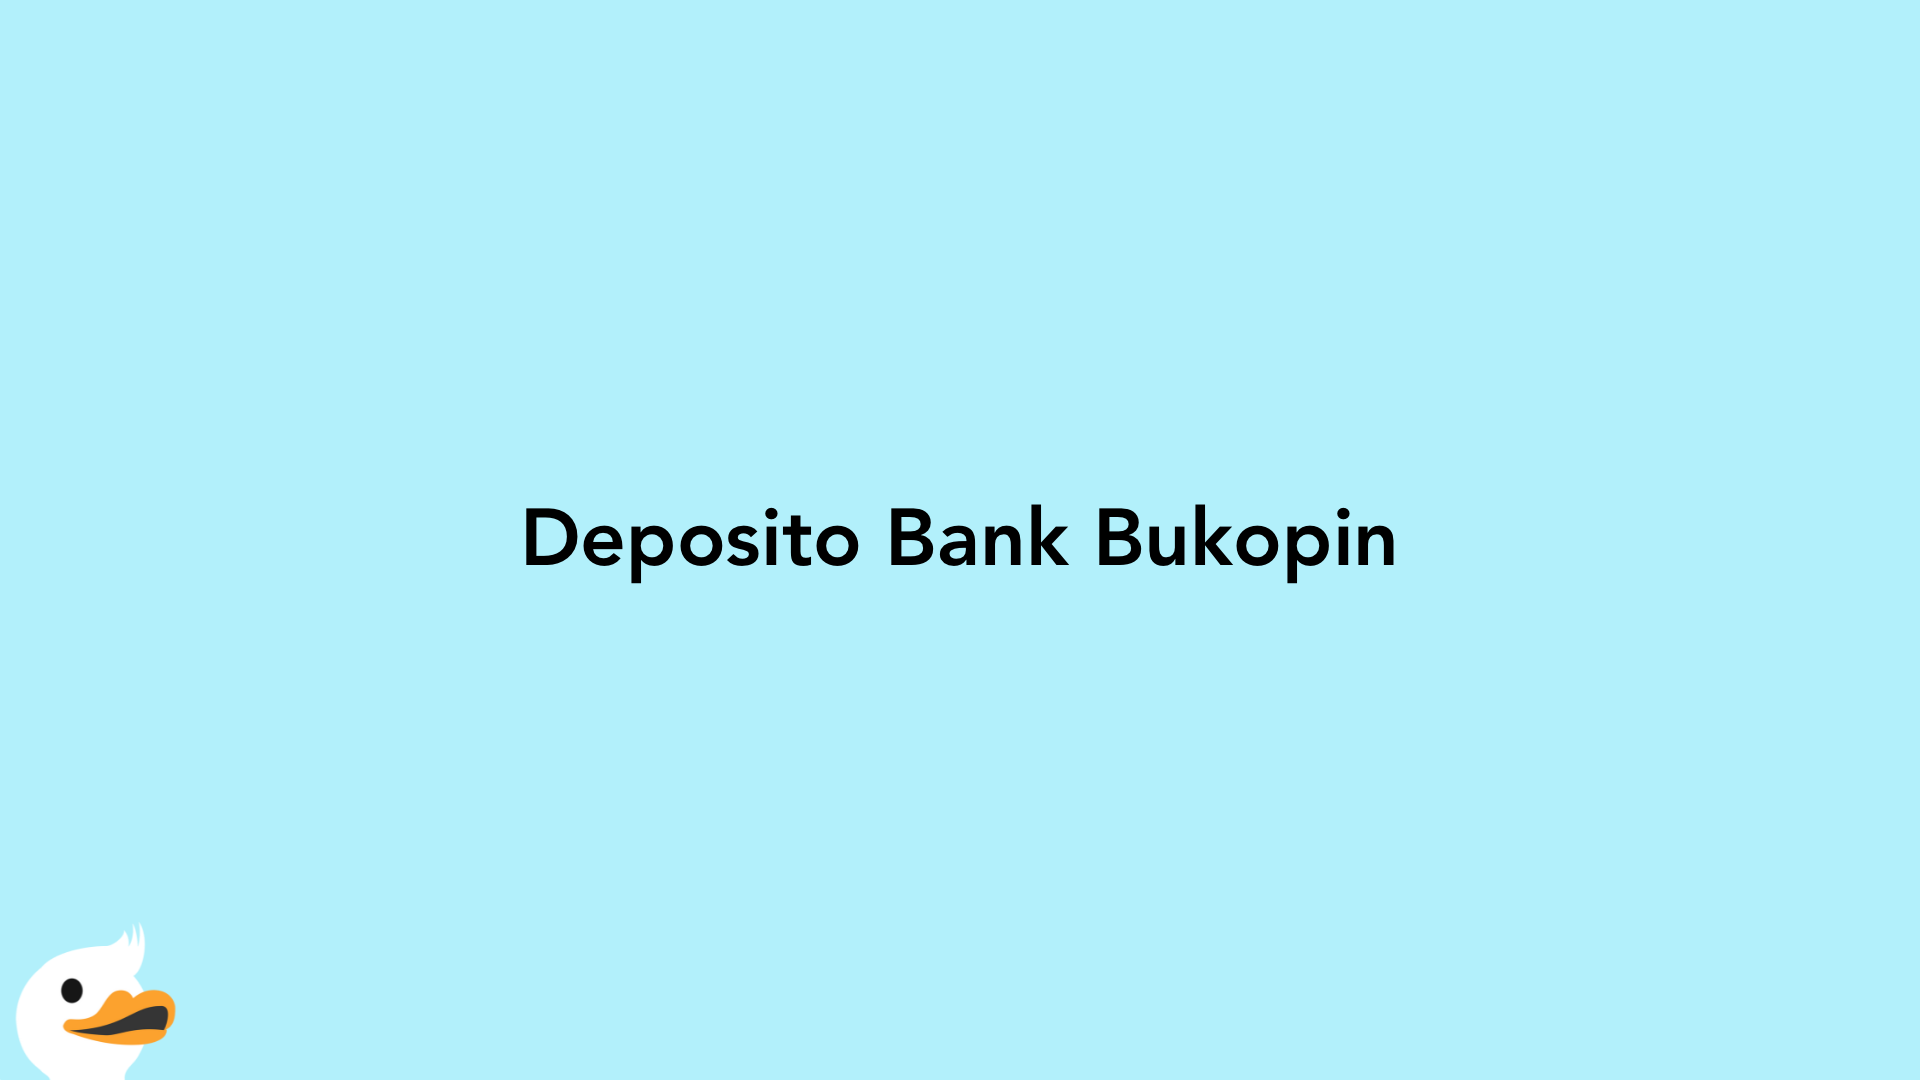 Deposito Bank Bukopin